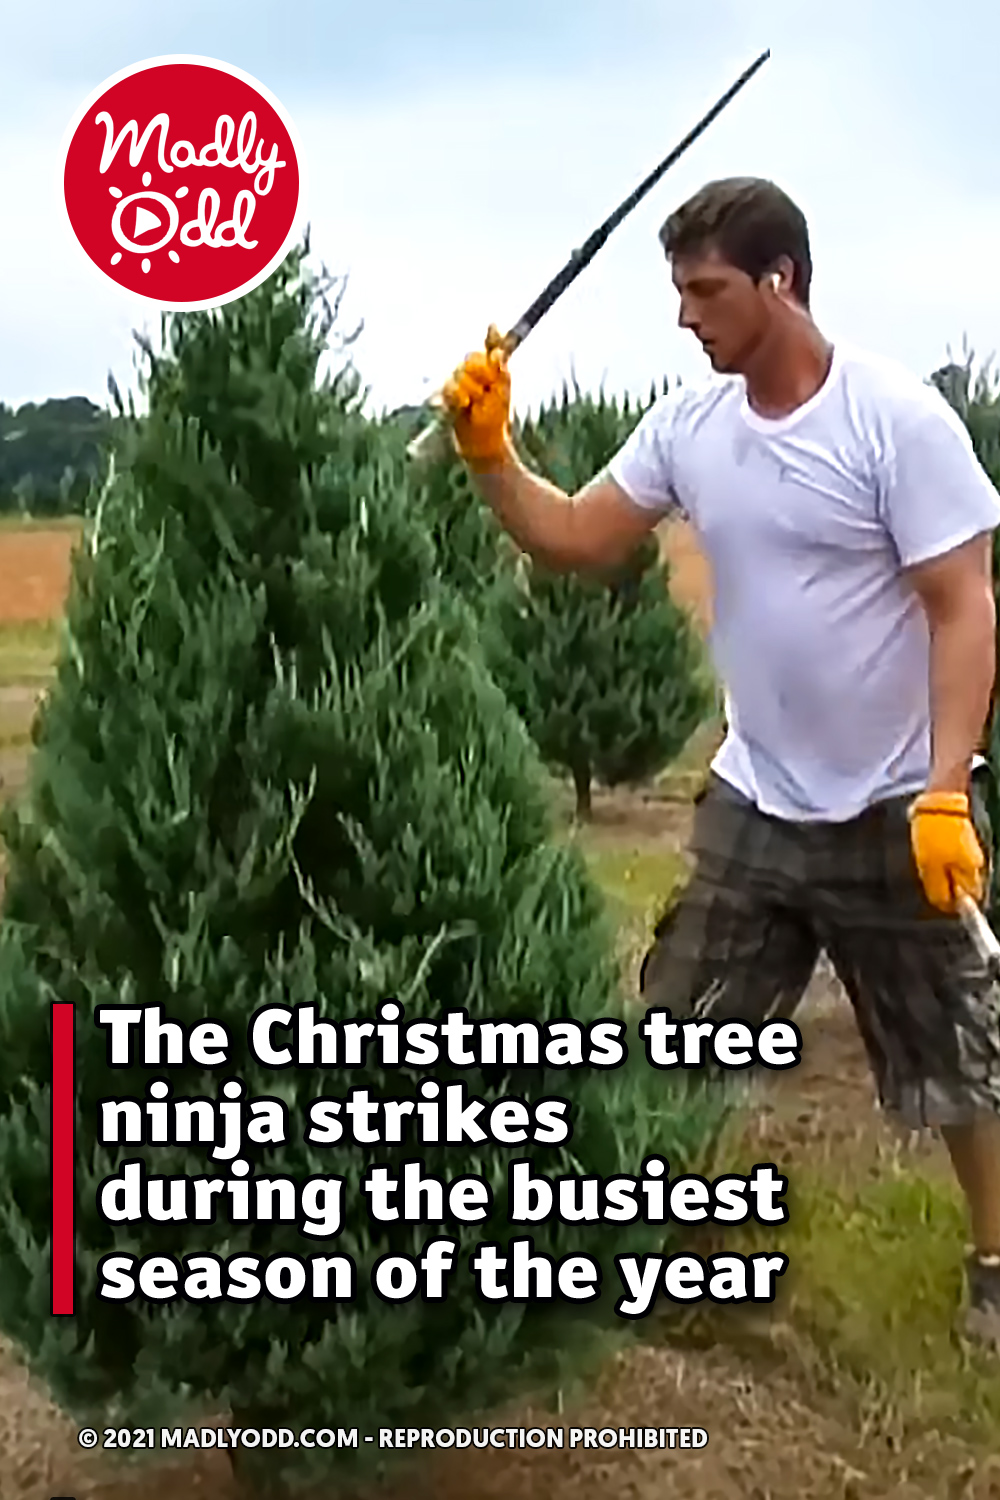 The Christmas tree ninja strikes during the busiest season of the year